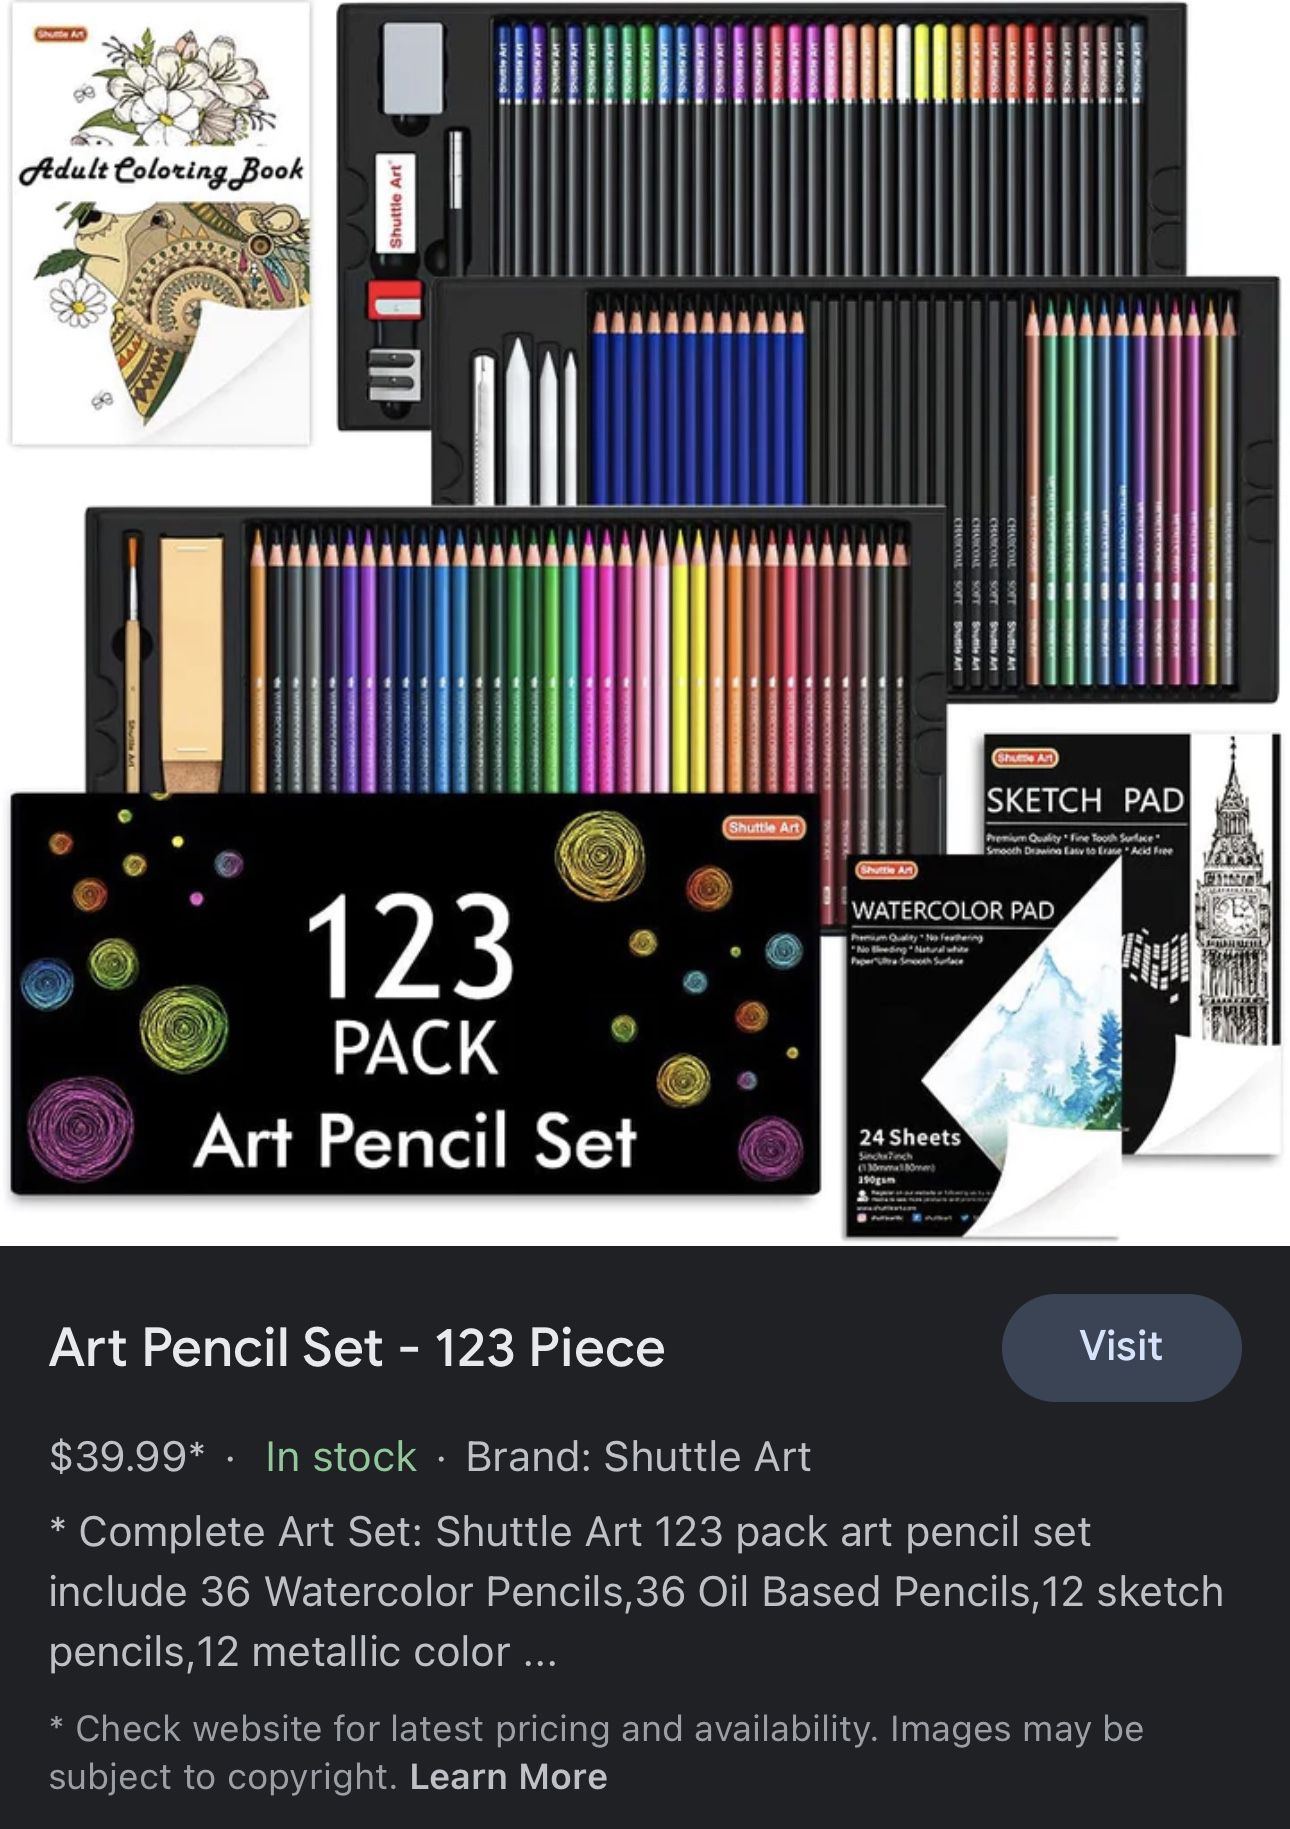 Art Pencil Set - 123 Piece